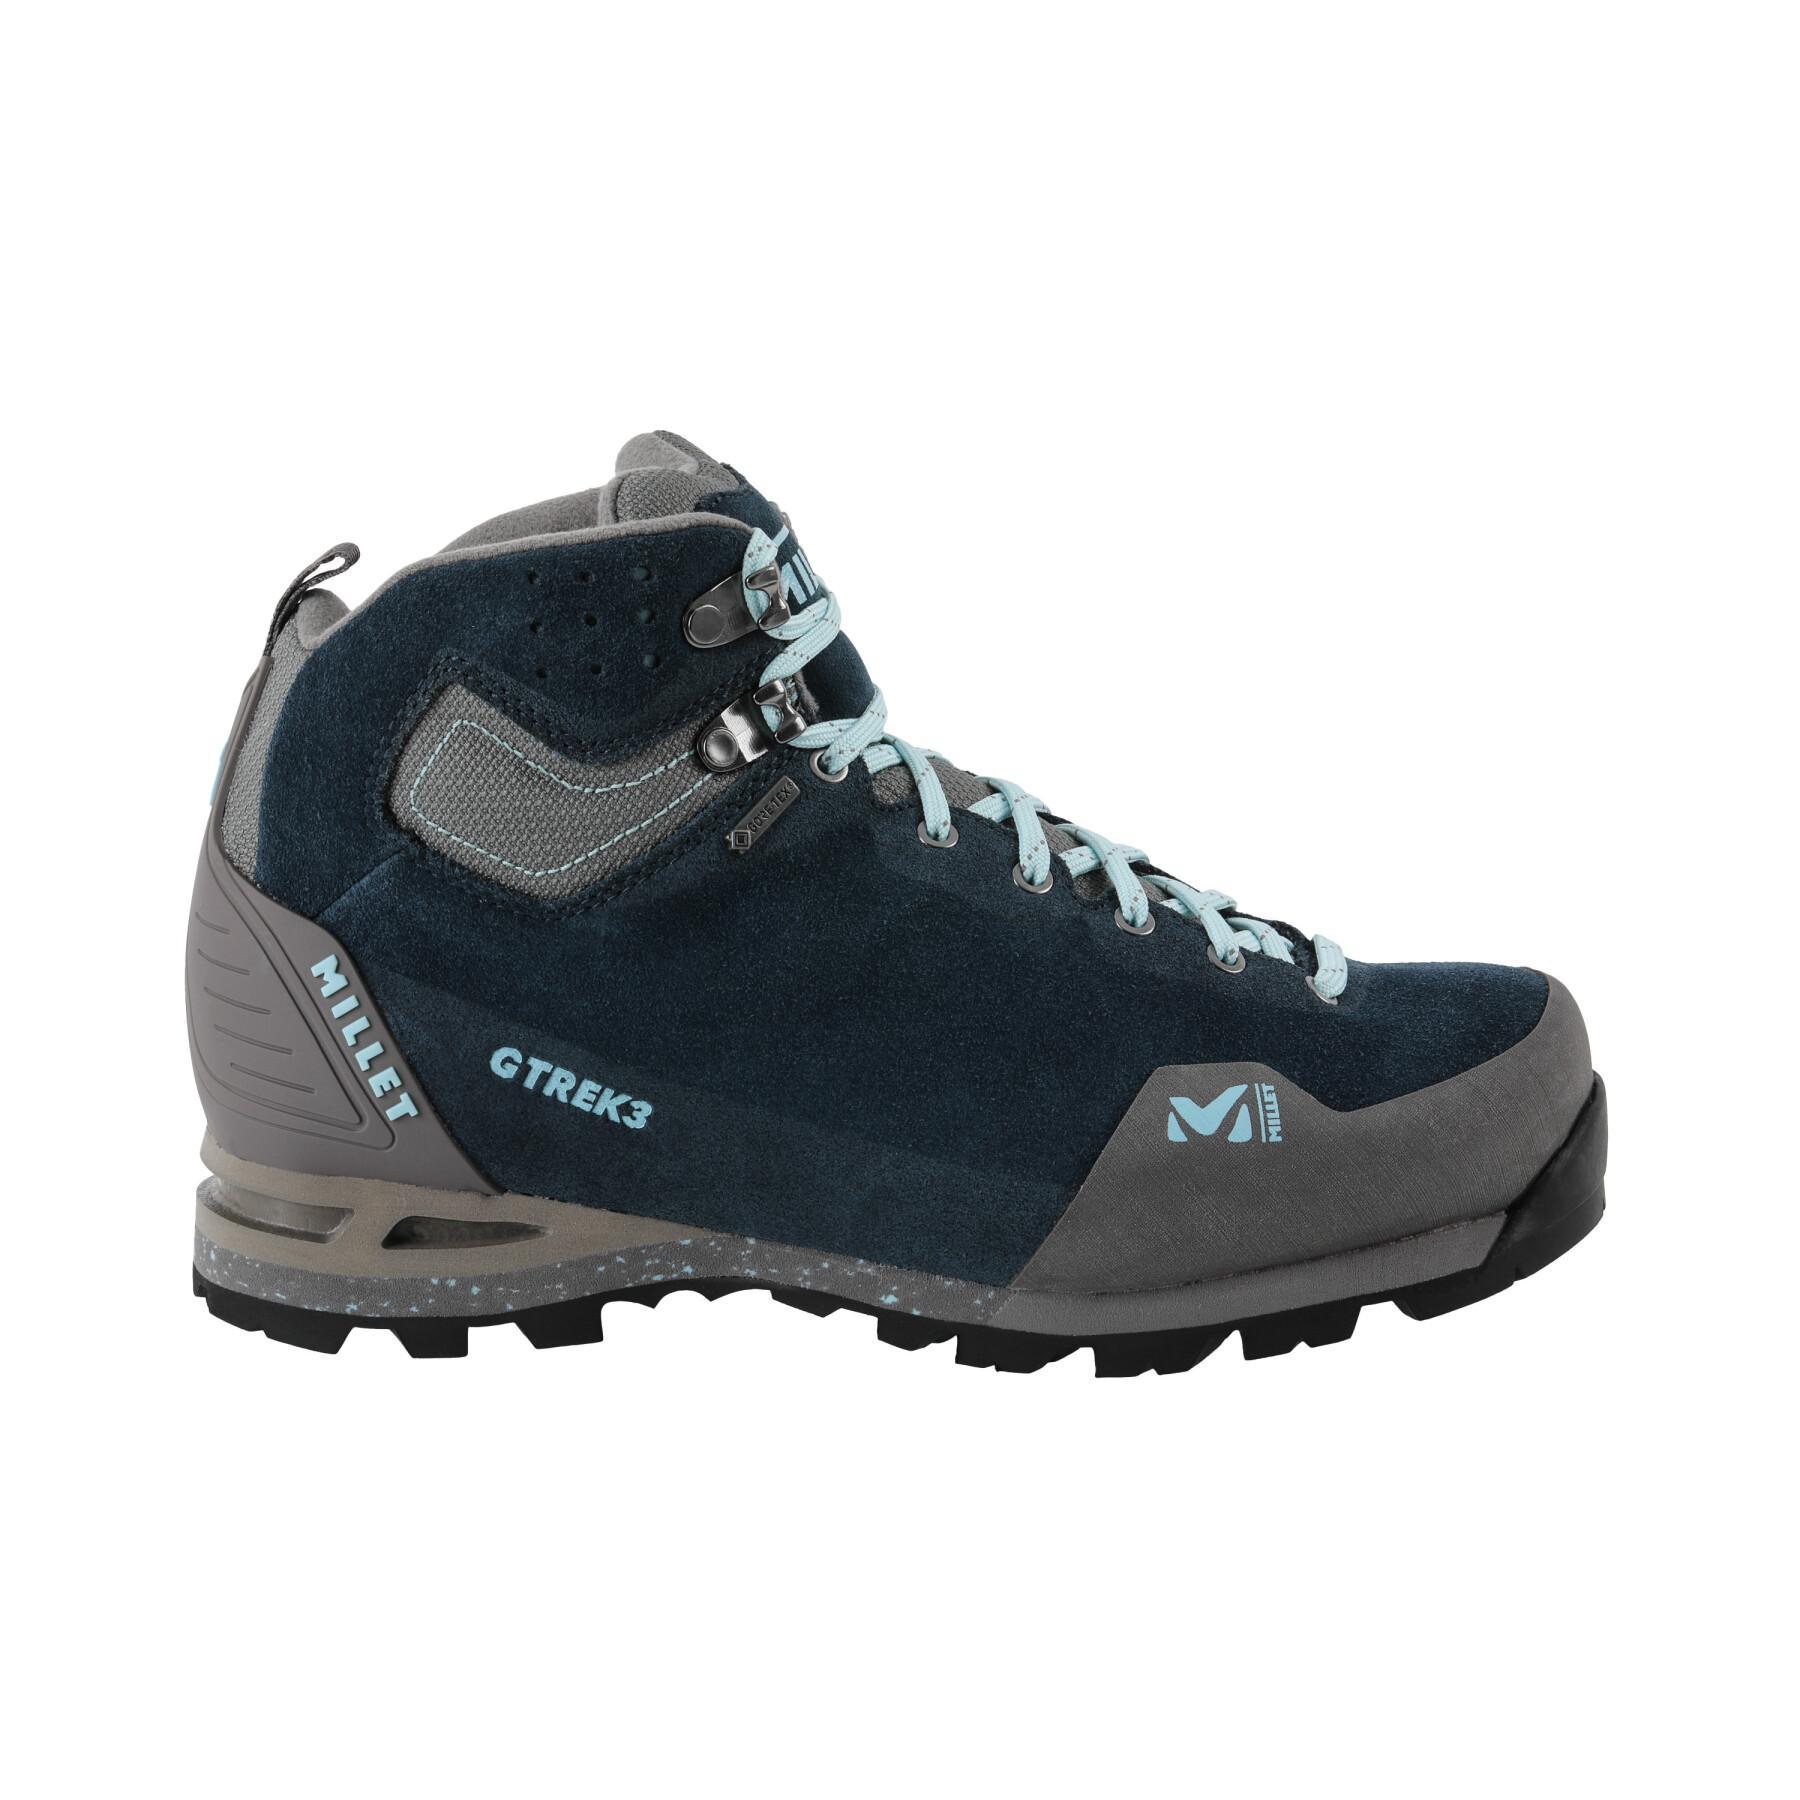 Women's hiking shoes Millet G Trek 3 Goretex